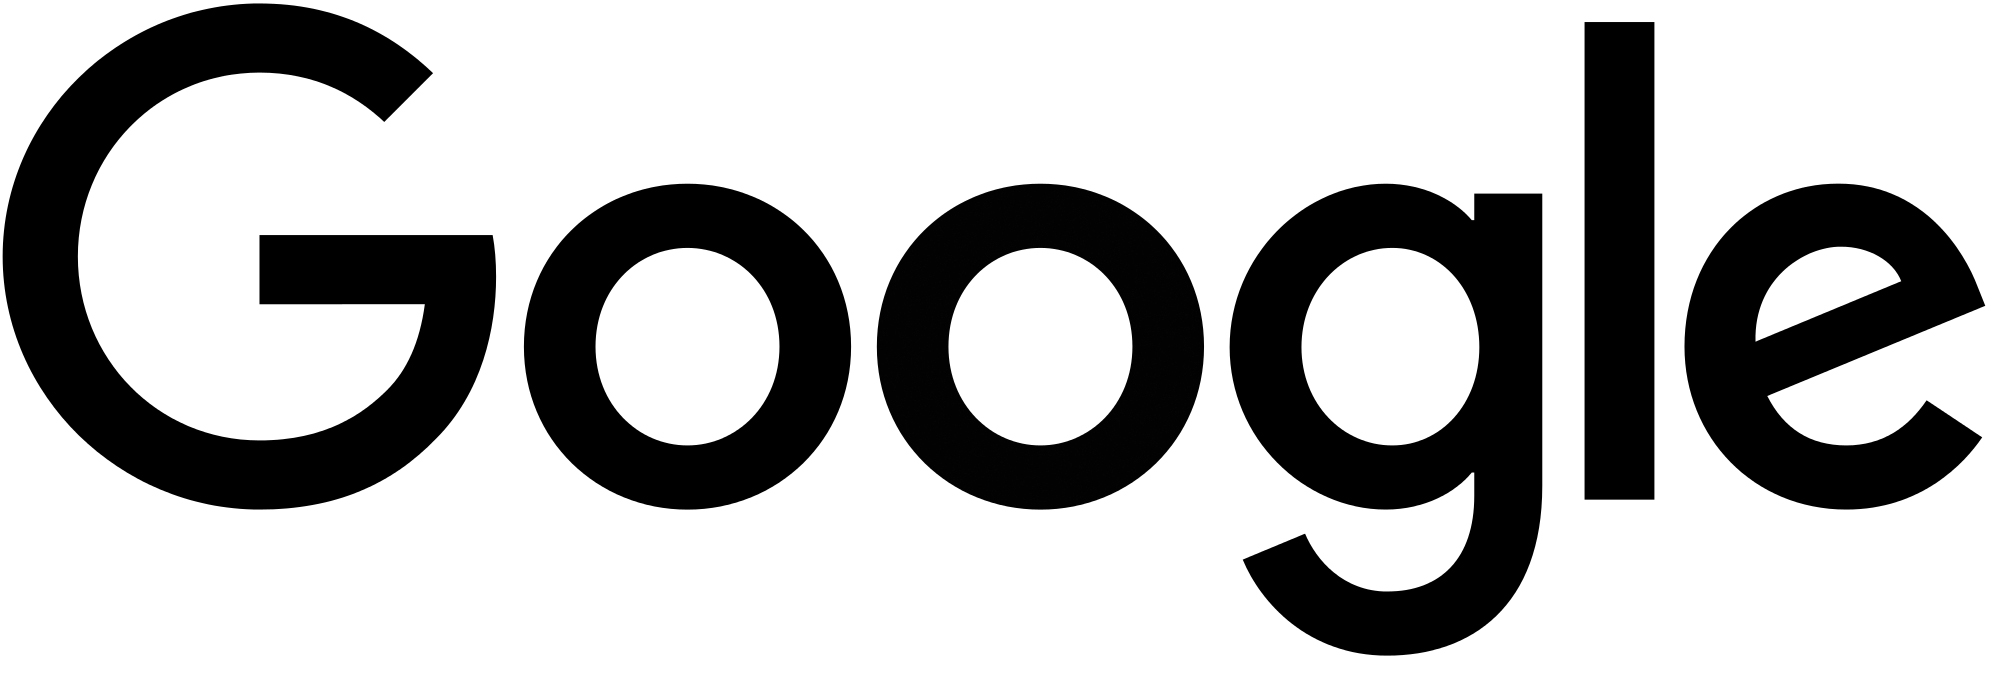 Google_2015_logo.svg-1.jpg